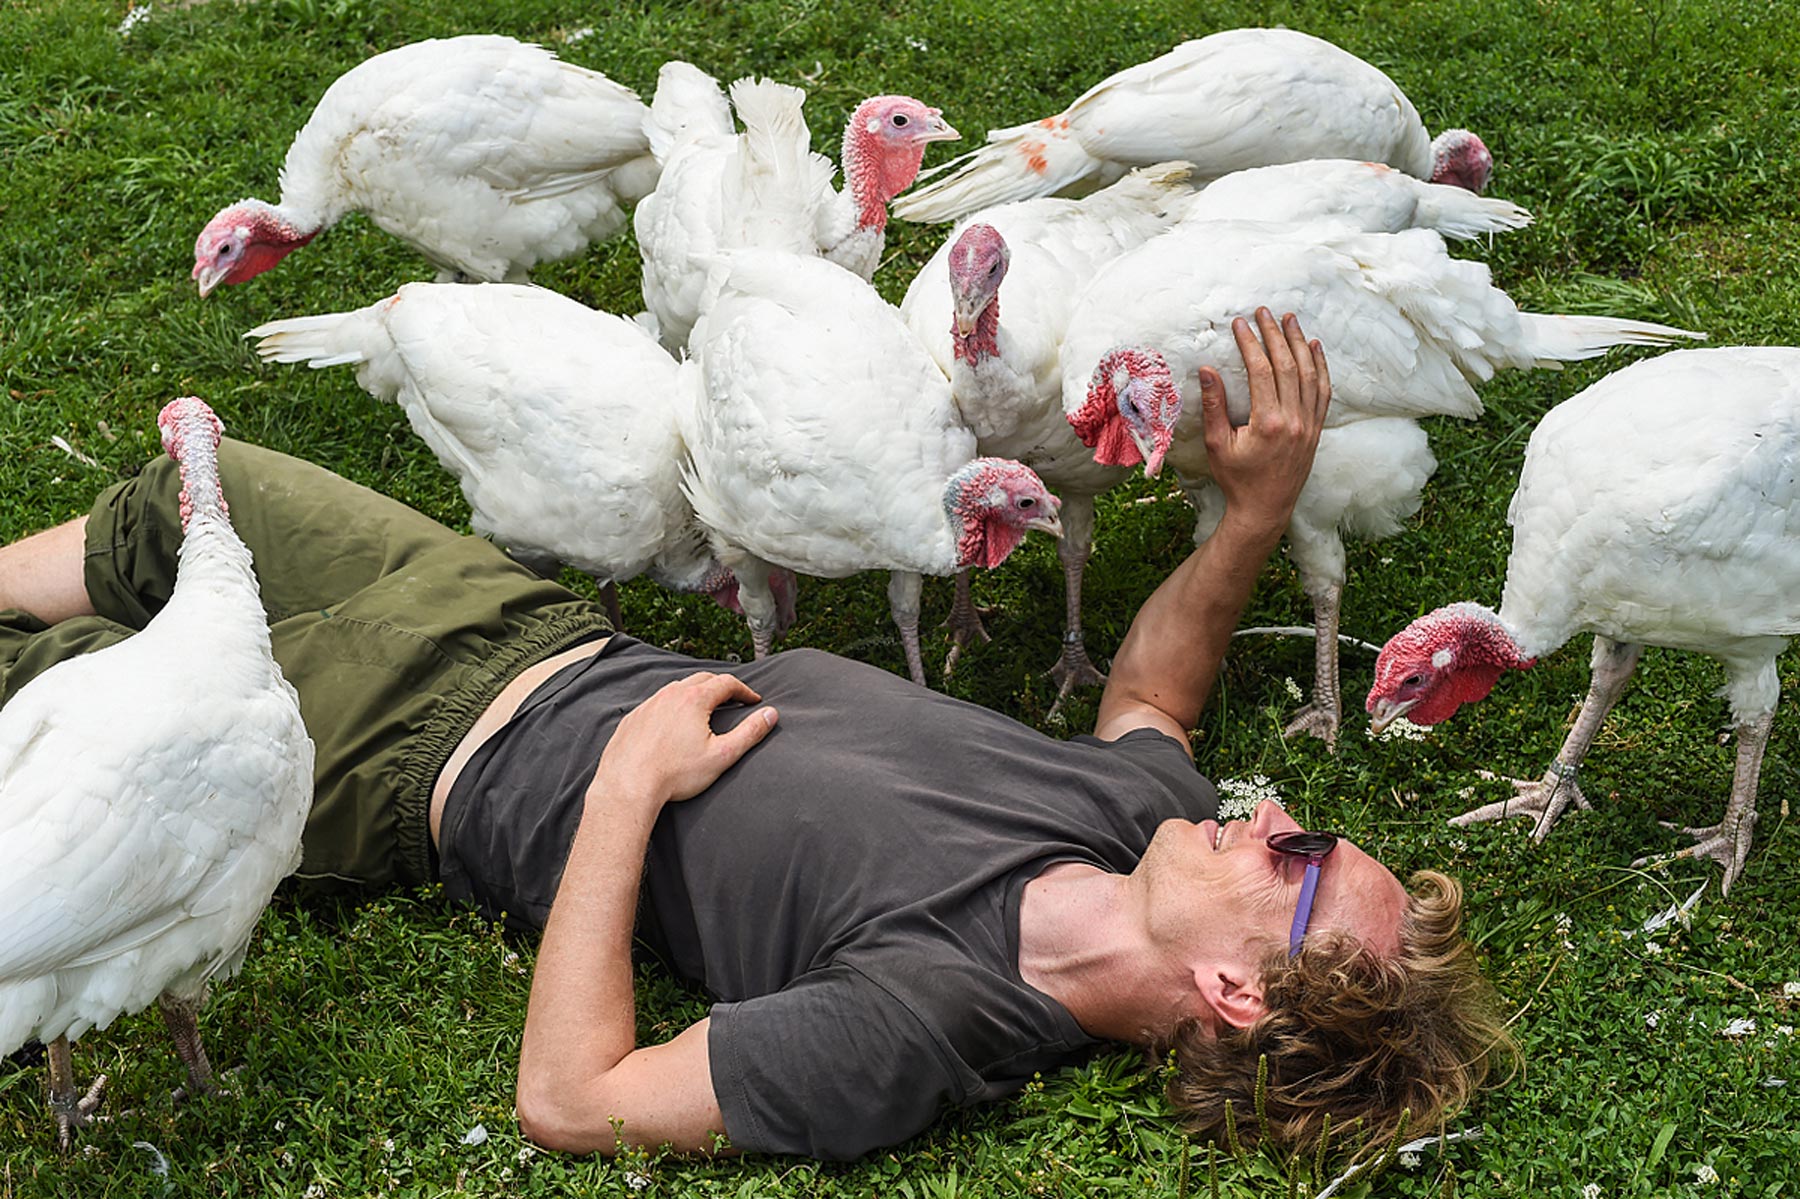 Activist Jan Sorgenfrei communes with rescued turkeys at Farm Sanctuary's New York shelter.